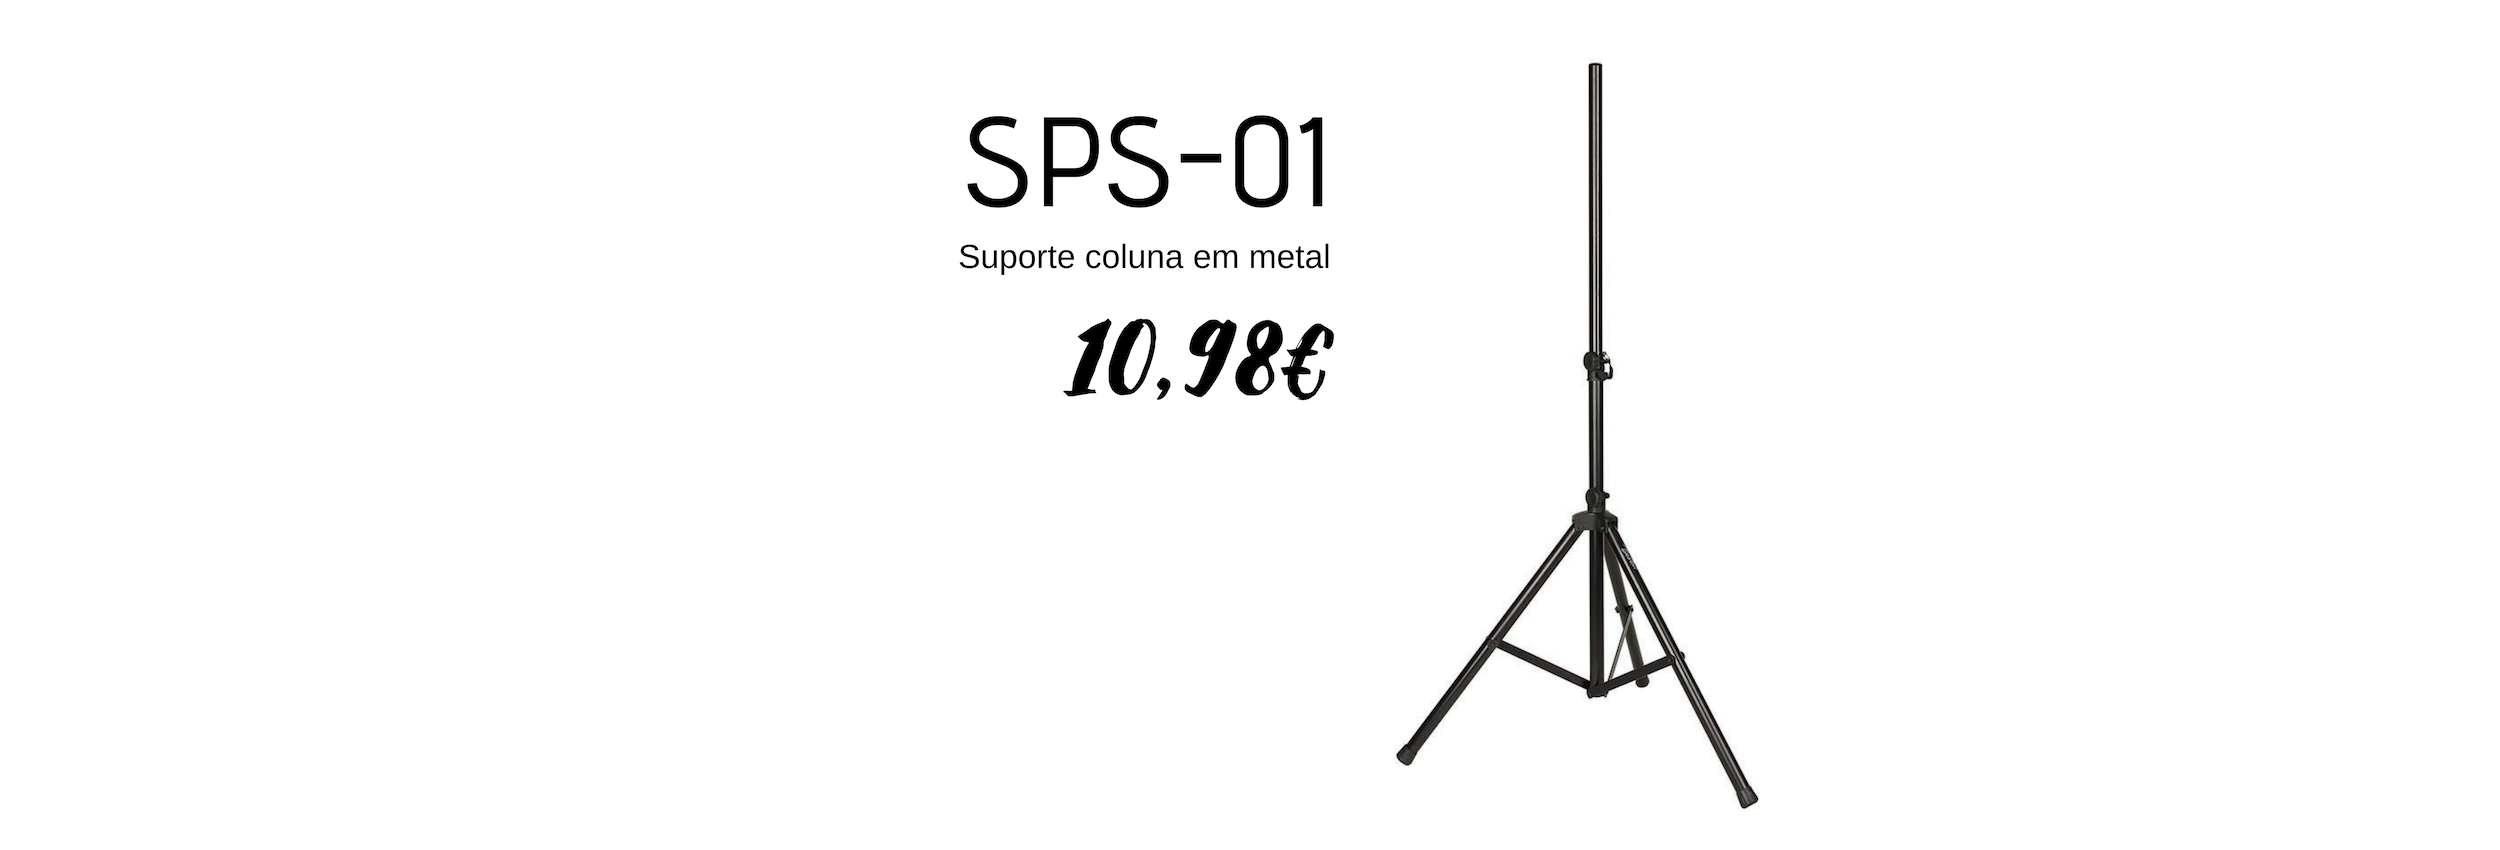 SPS-01